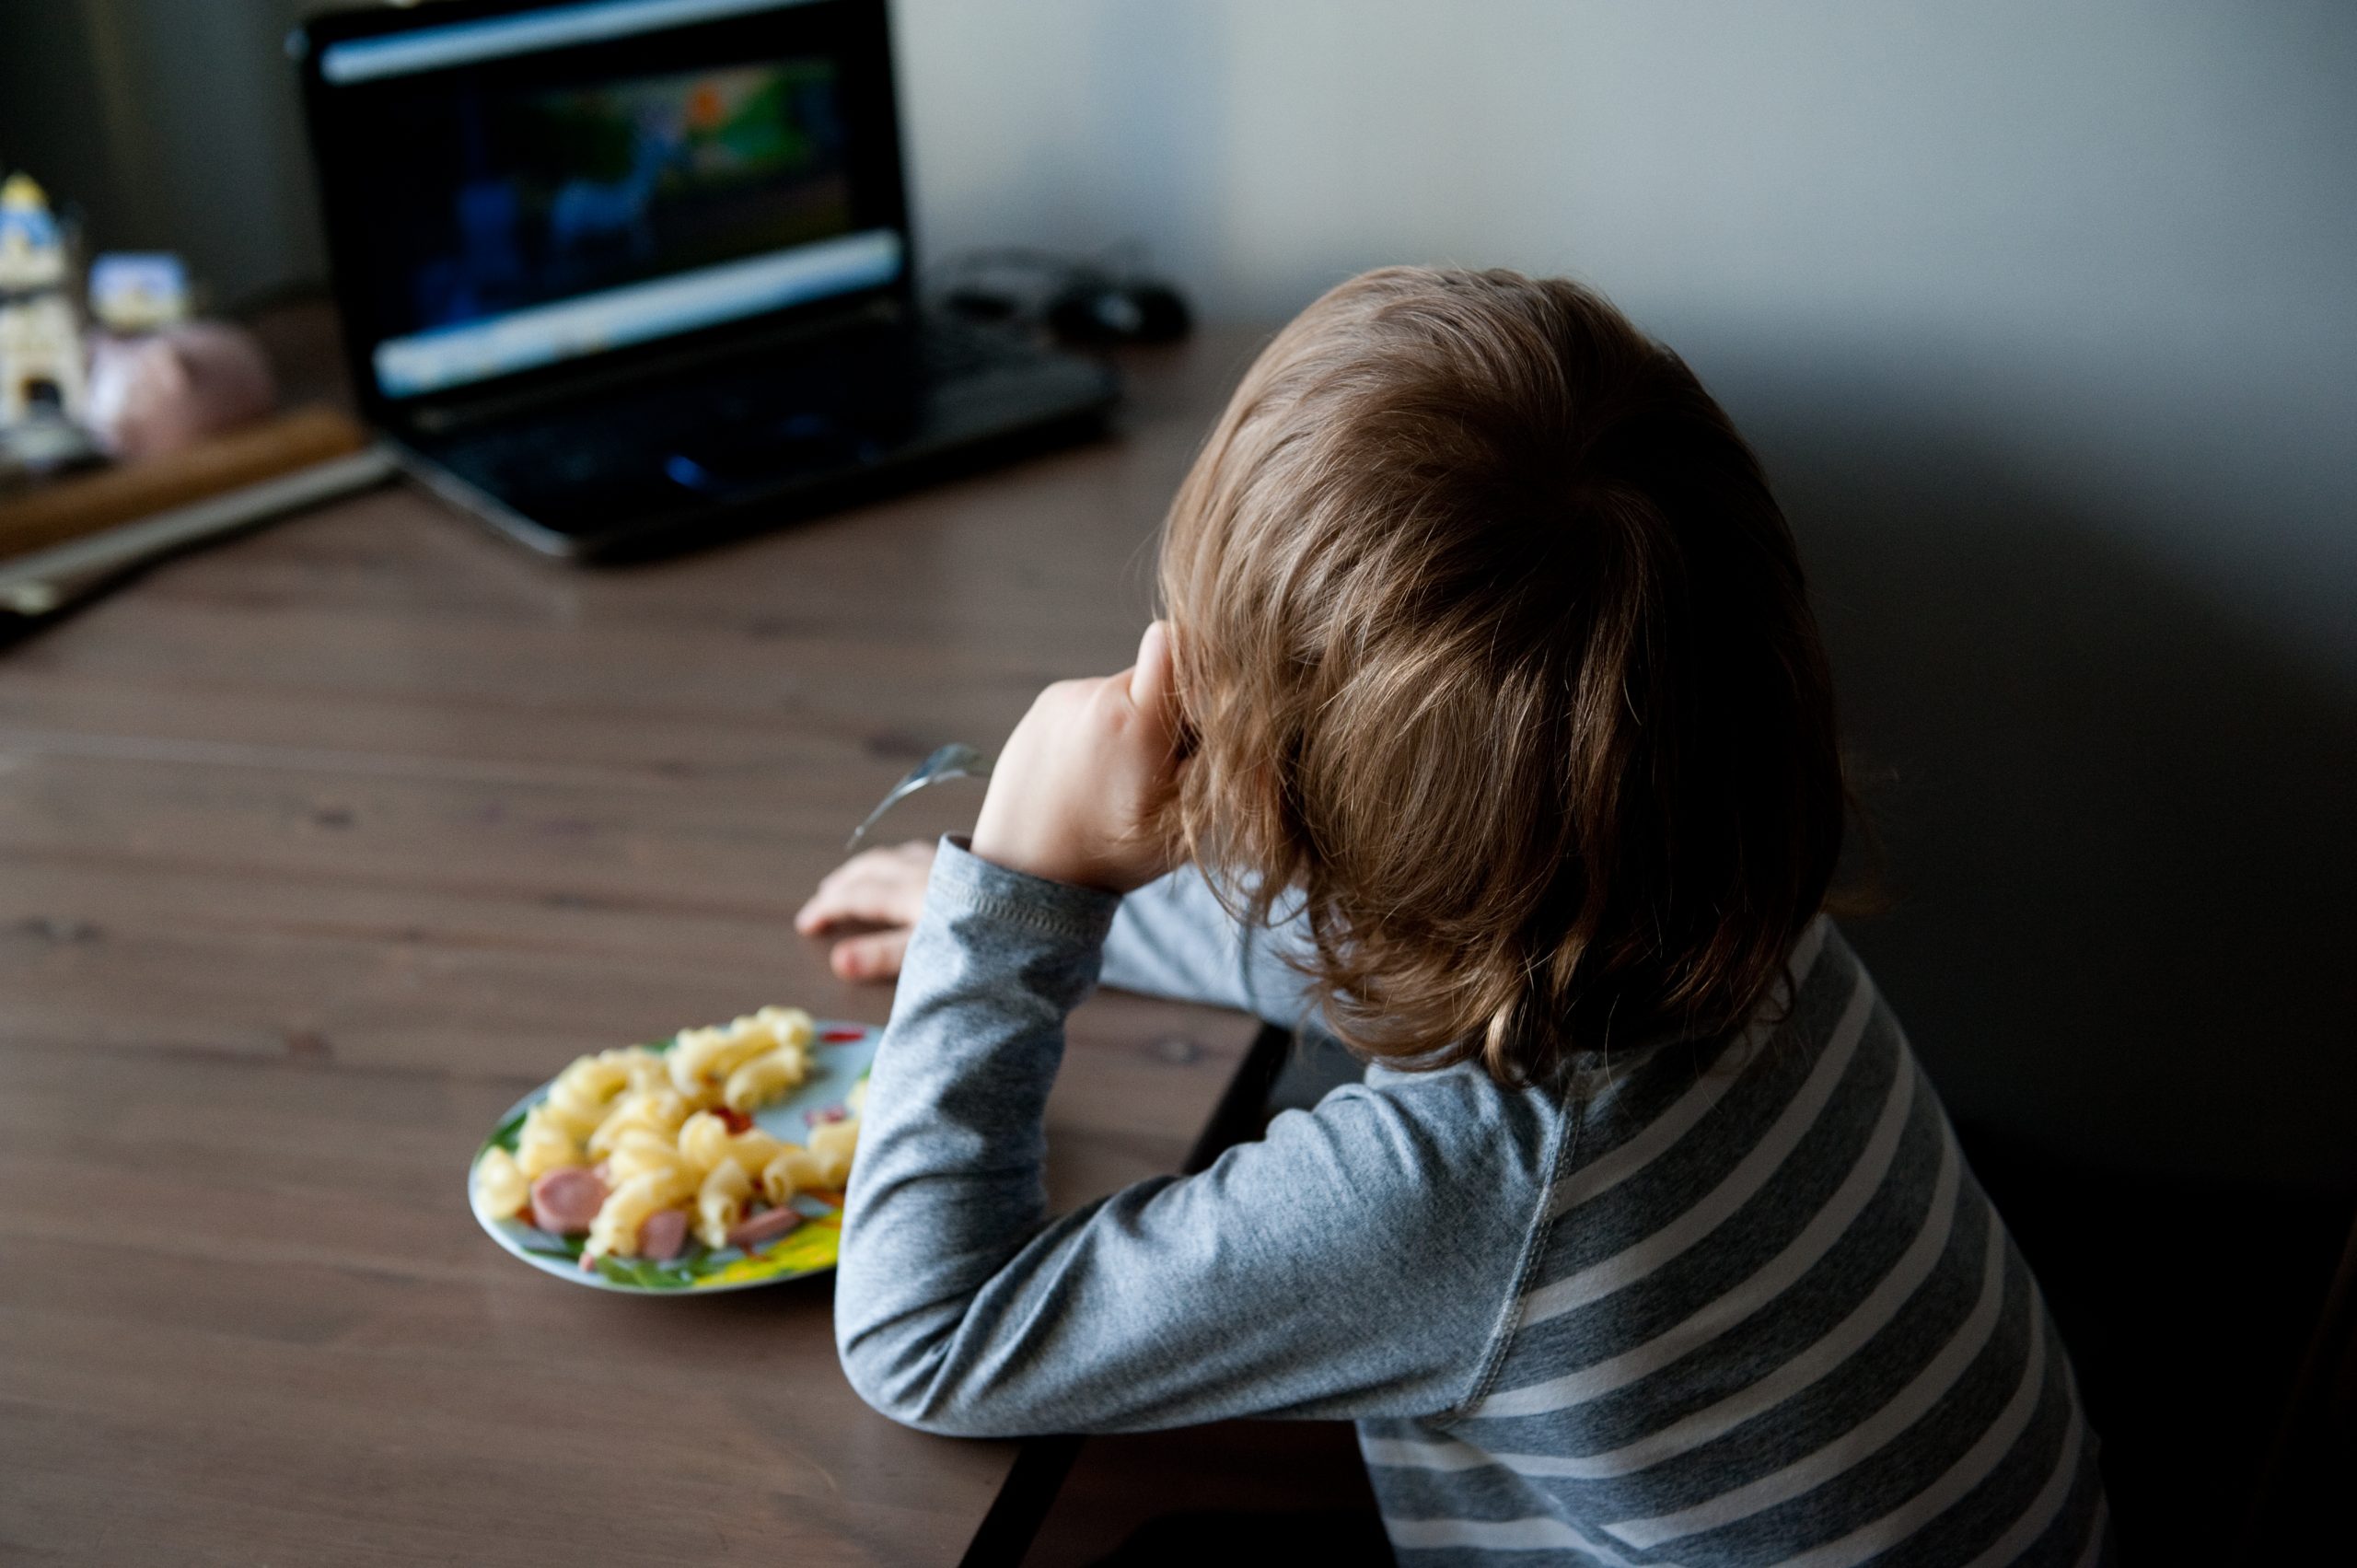 Enfant déjeunant en regardant l'écran d'un ordinateur portable